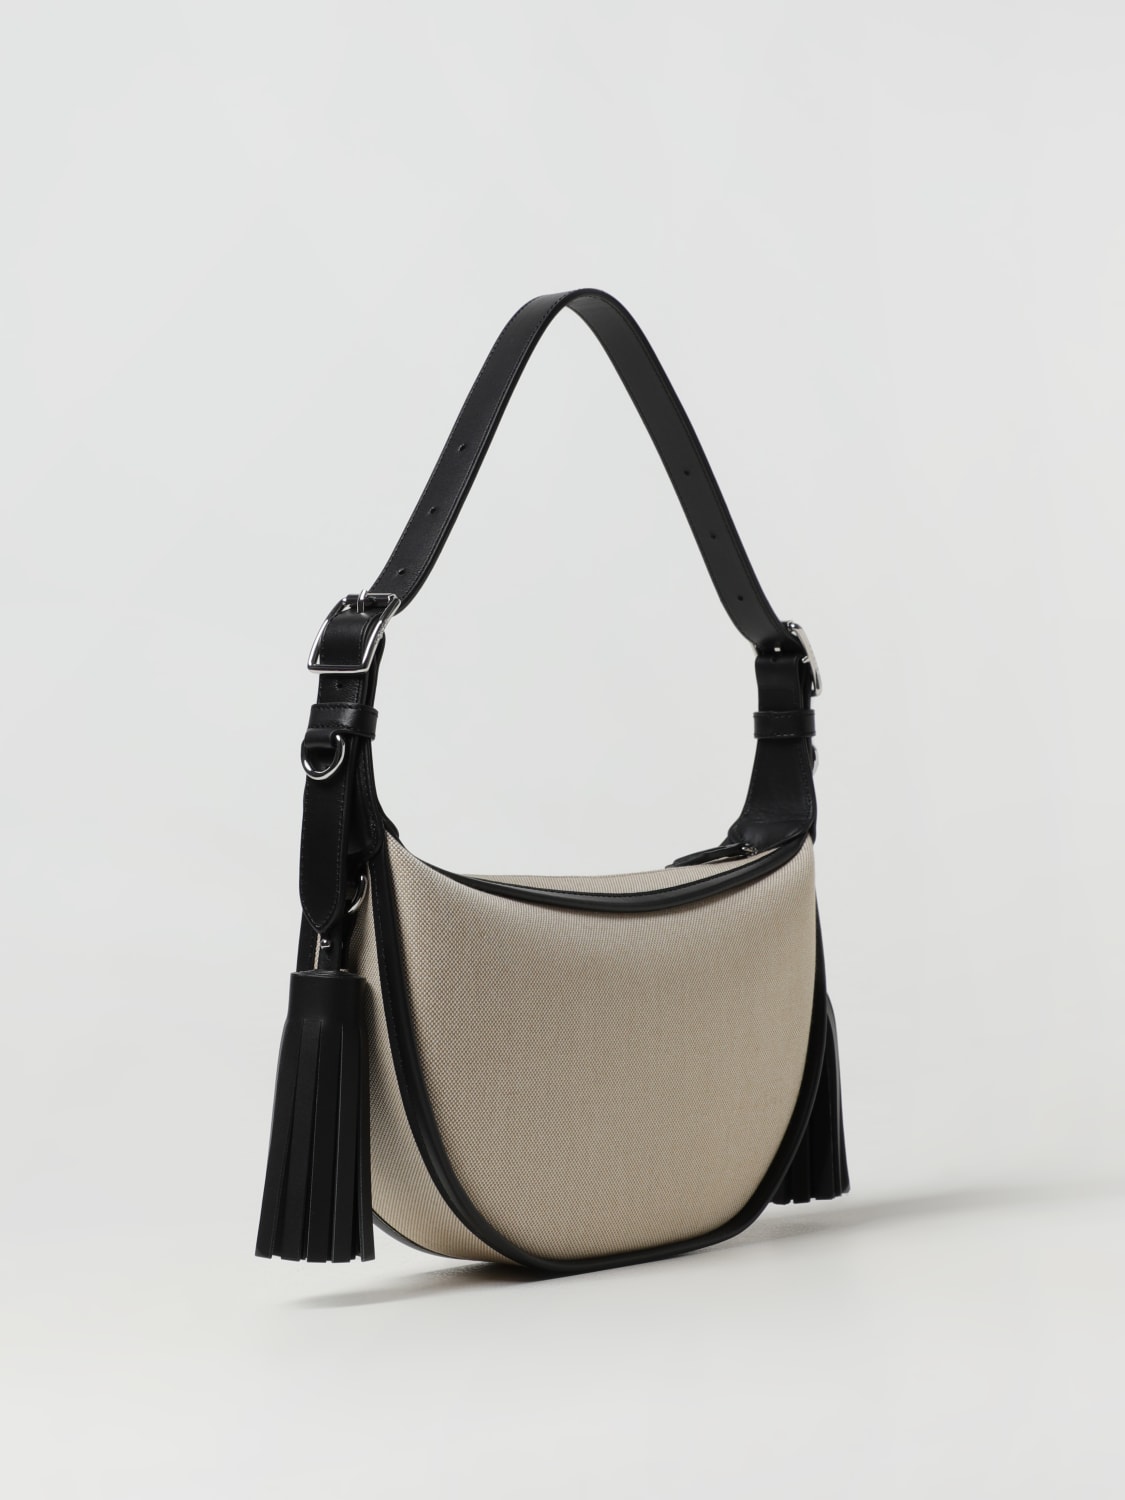 KENZO: Hobo bag in cotton canvas - Black | KENZO shoulder bag ...